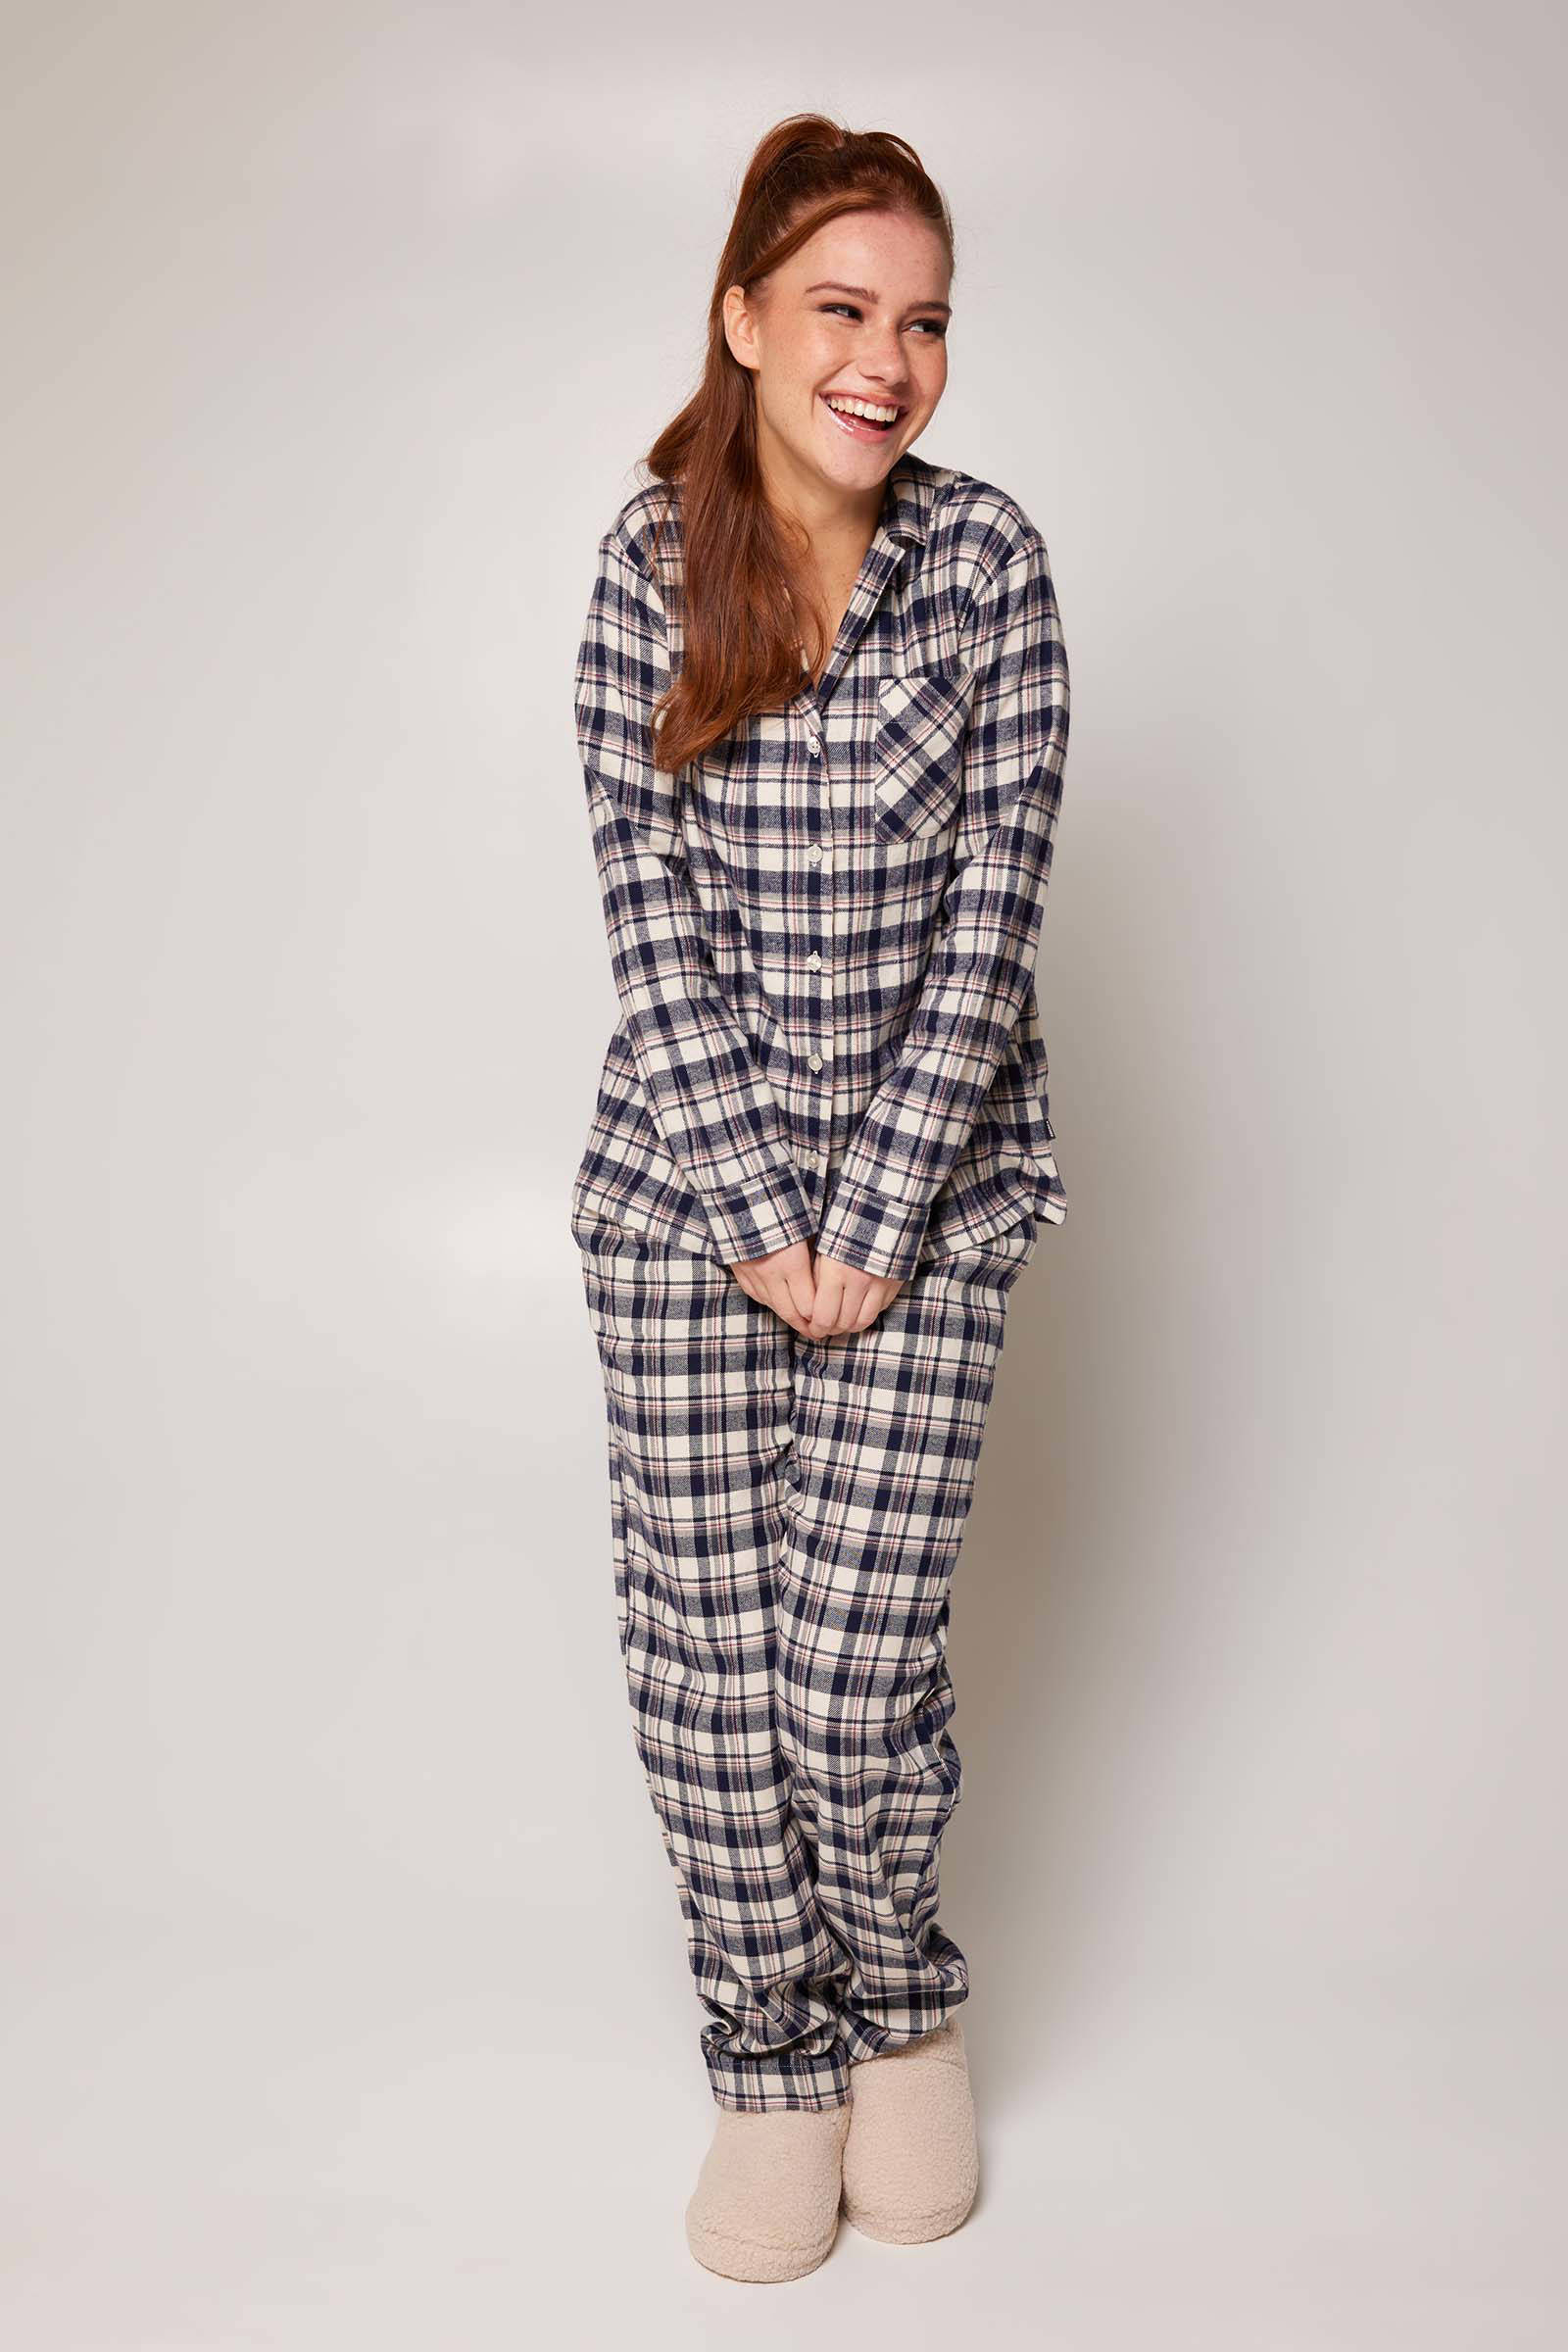 vanity fair satijnen pyjama set top broek badjas taupe Kleding Dameskleding Pyjamas & Badjassen Sets 